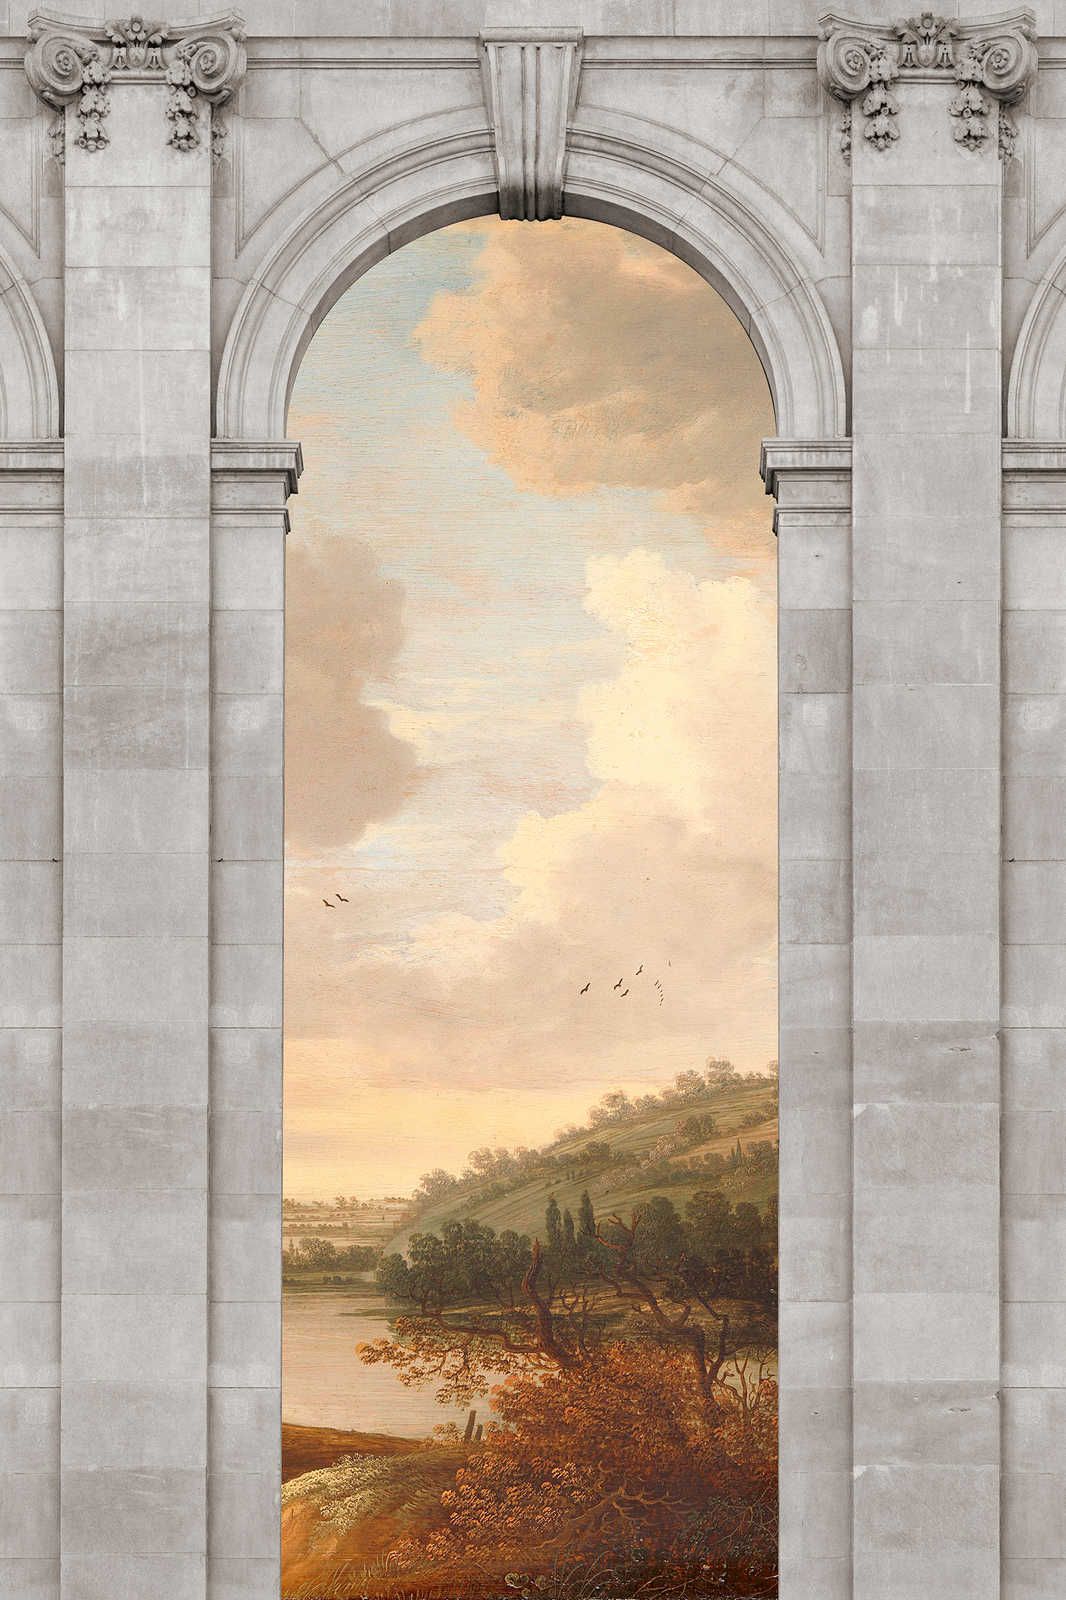             Castello 1 - Pintura en lienzo Paisaje y Arquitectura de Arco - 0,90 m x 0,60 m
        